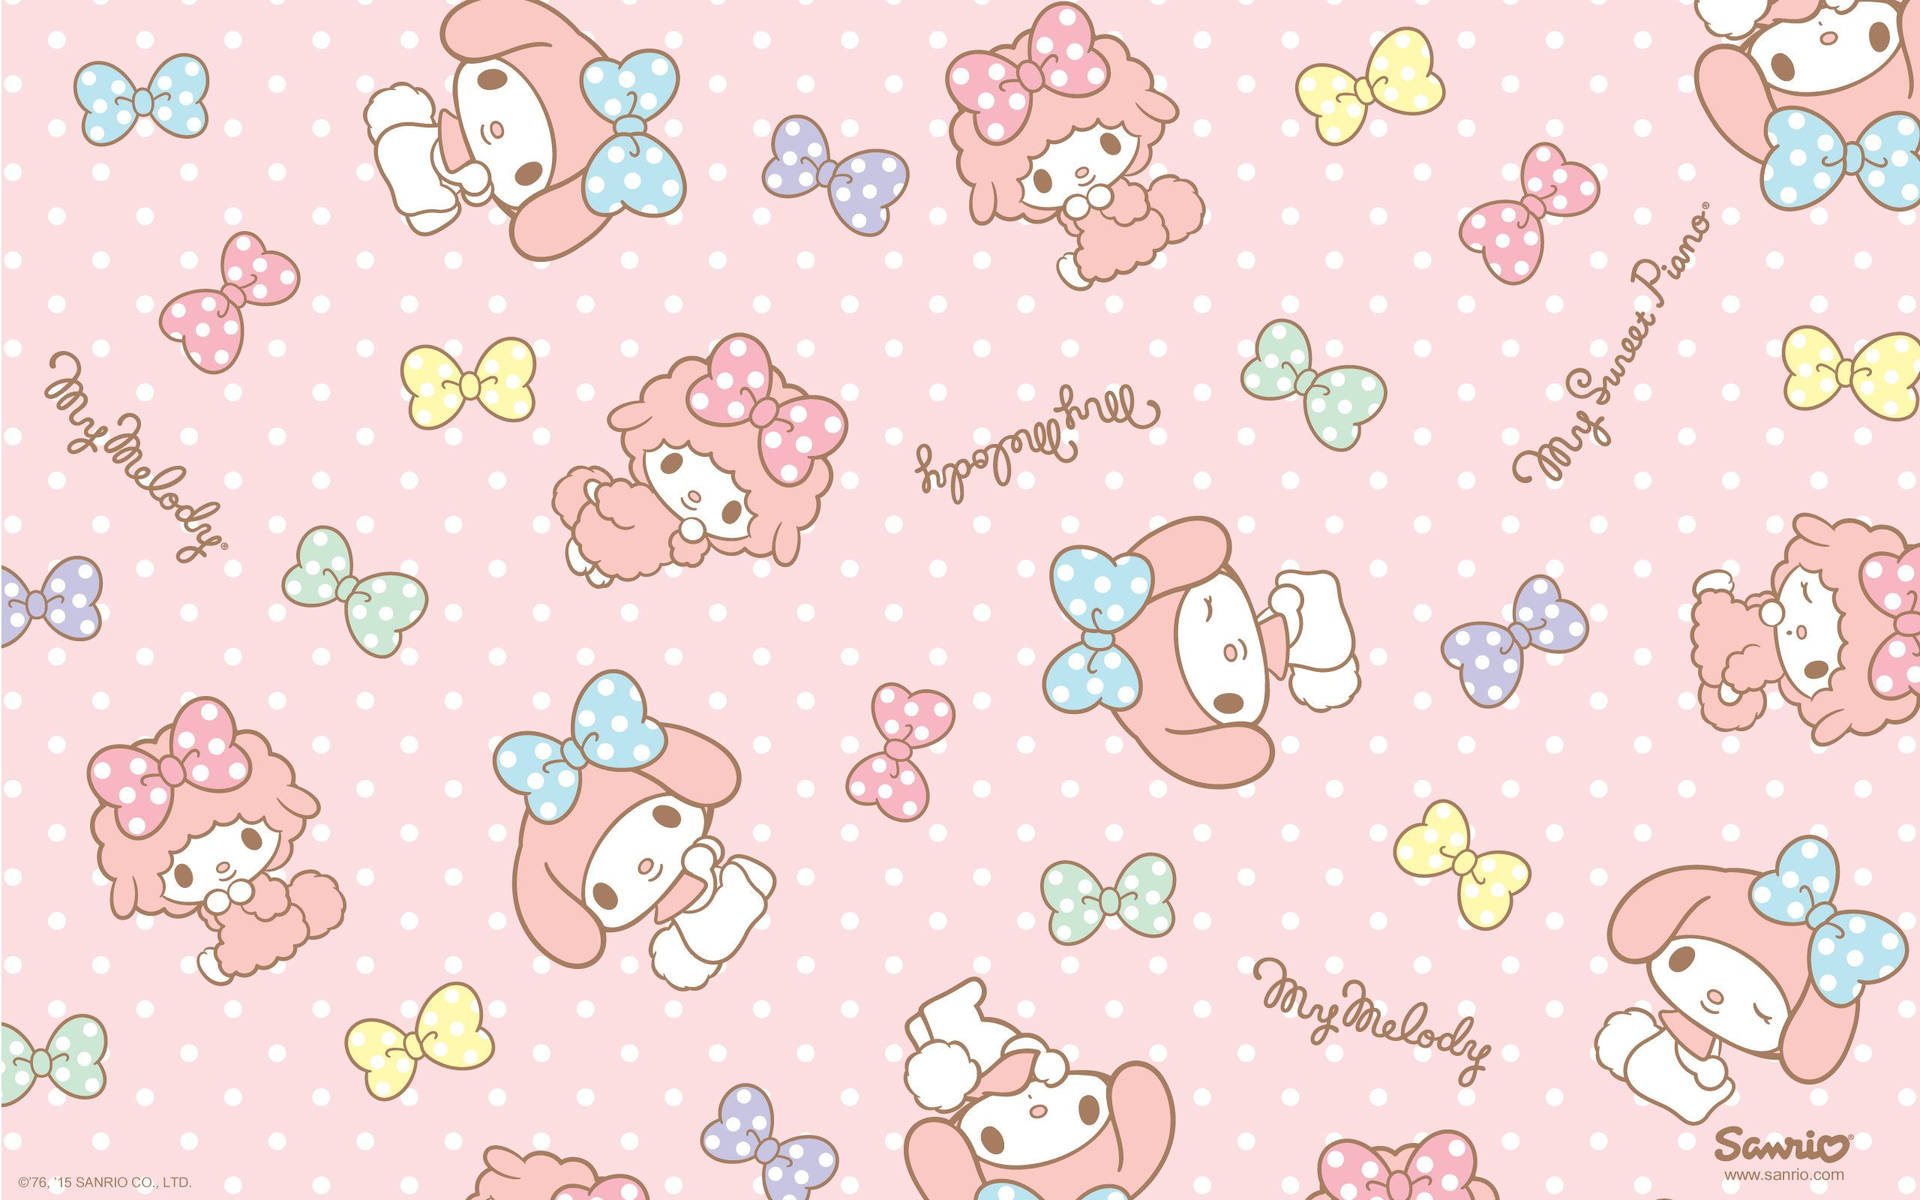 Süßes Sanrio Wallpaper